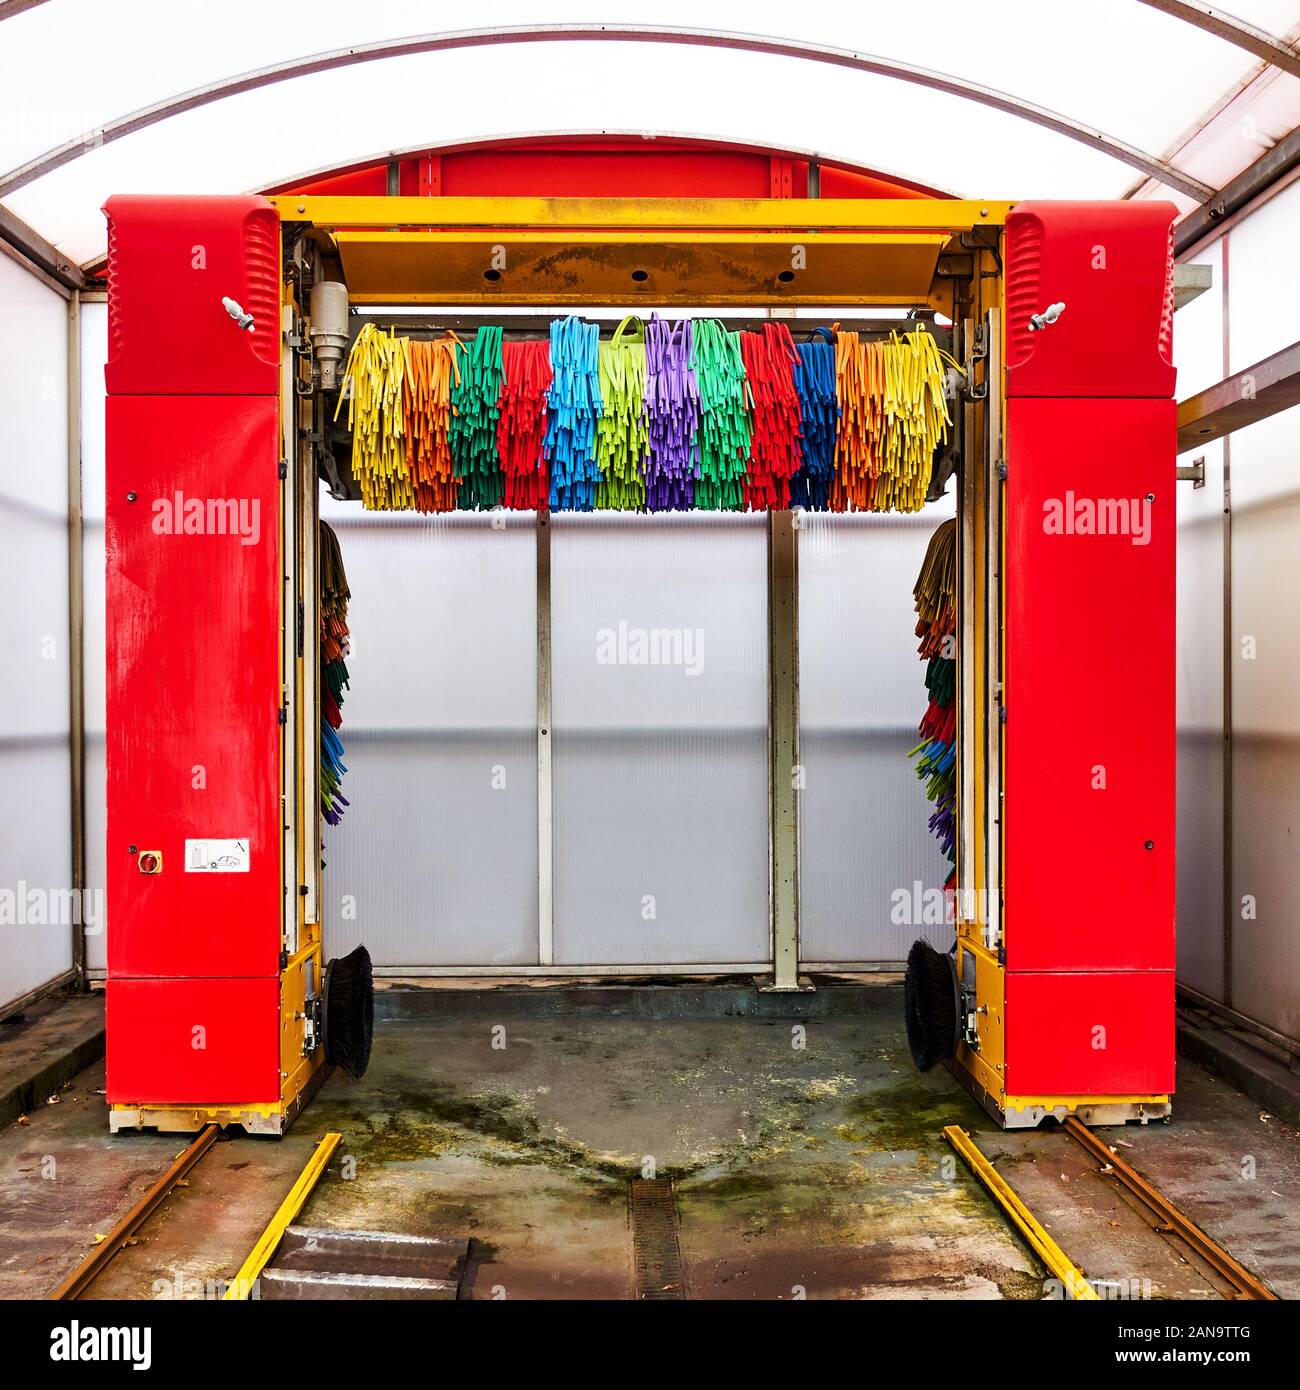 Automatic Washing Station Immagini e Fotos Stock - Alamy